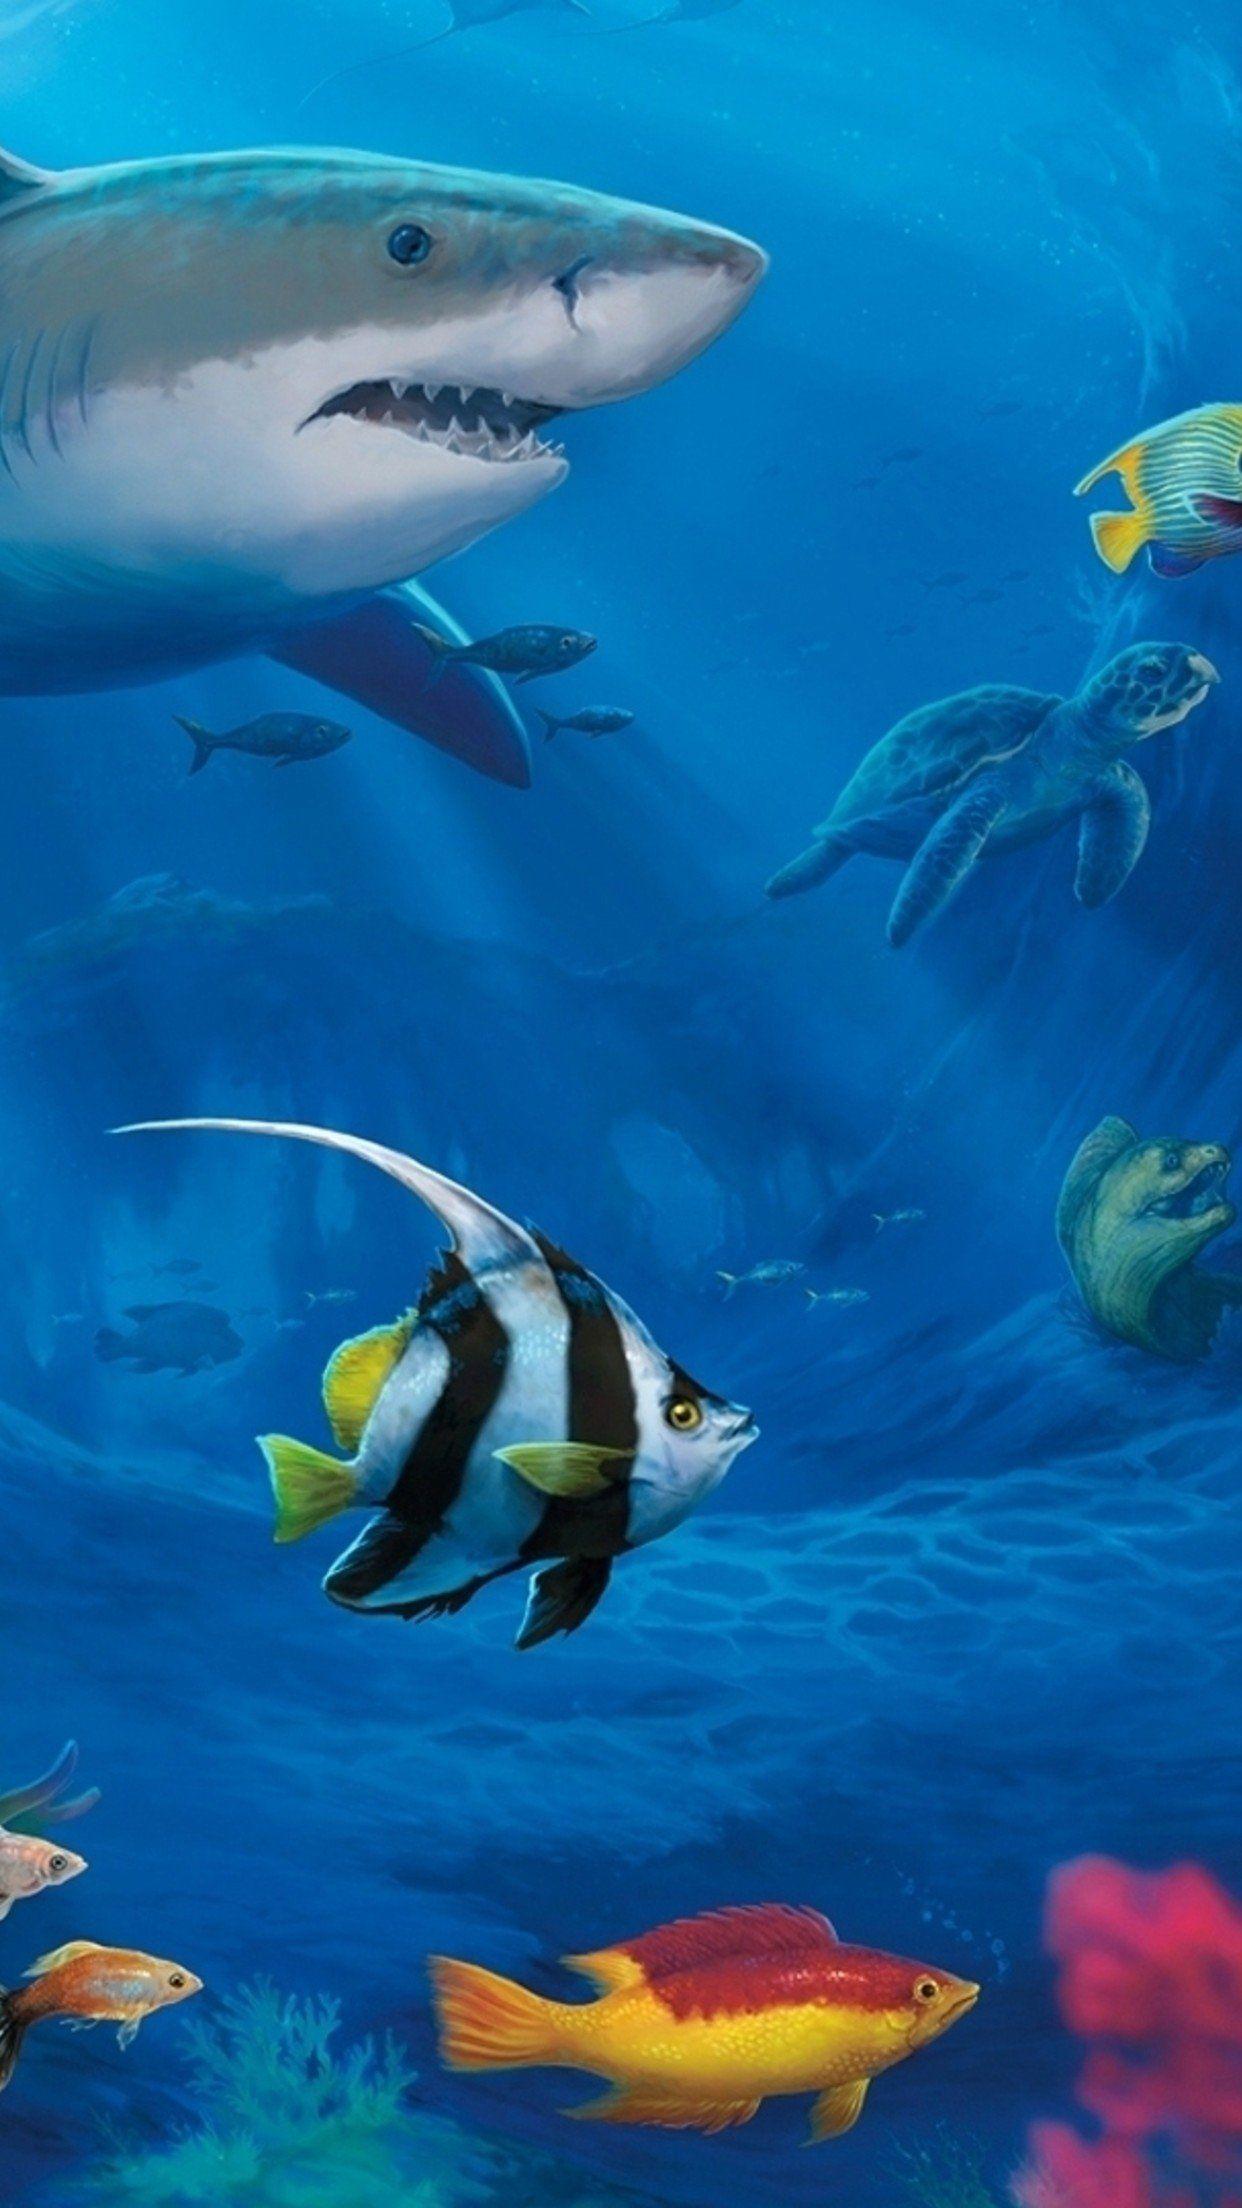 Underwater Iphone Wallpapers Top Free Underwater Iphone Backgrounds Wallpaperaccess